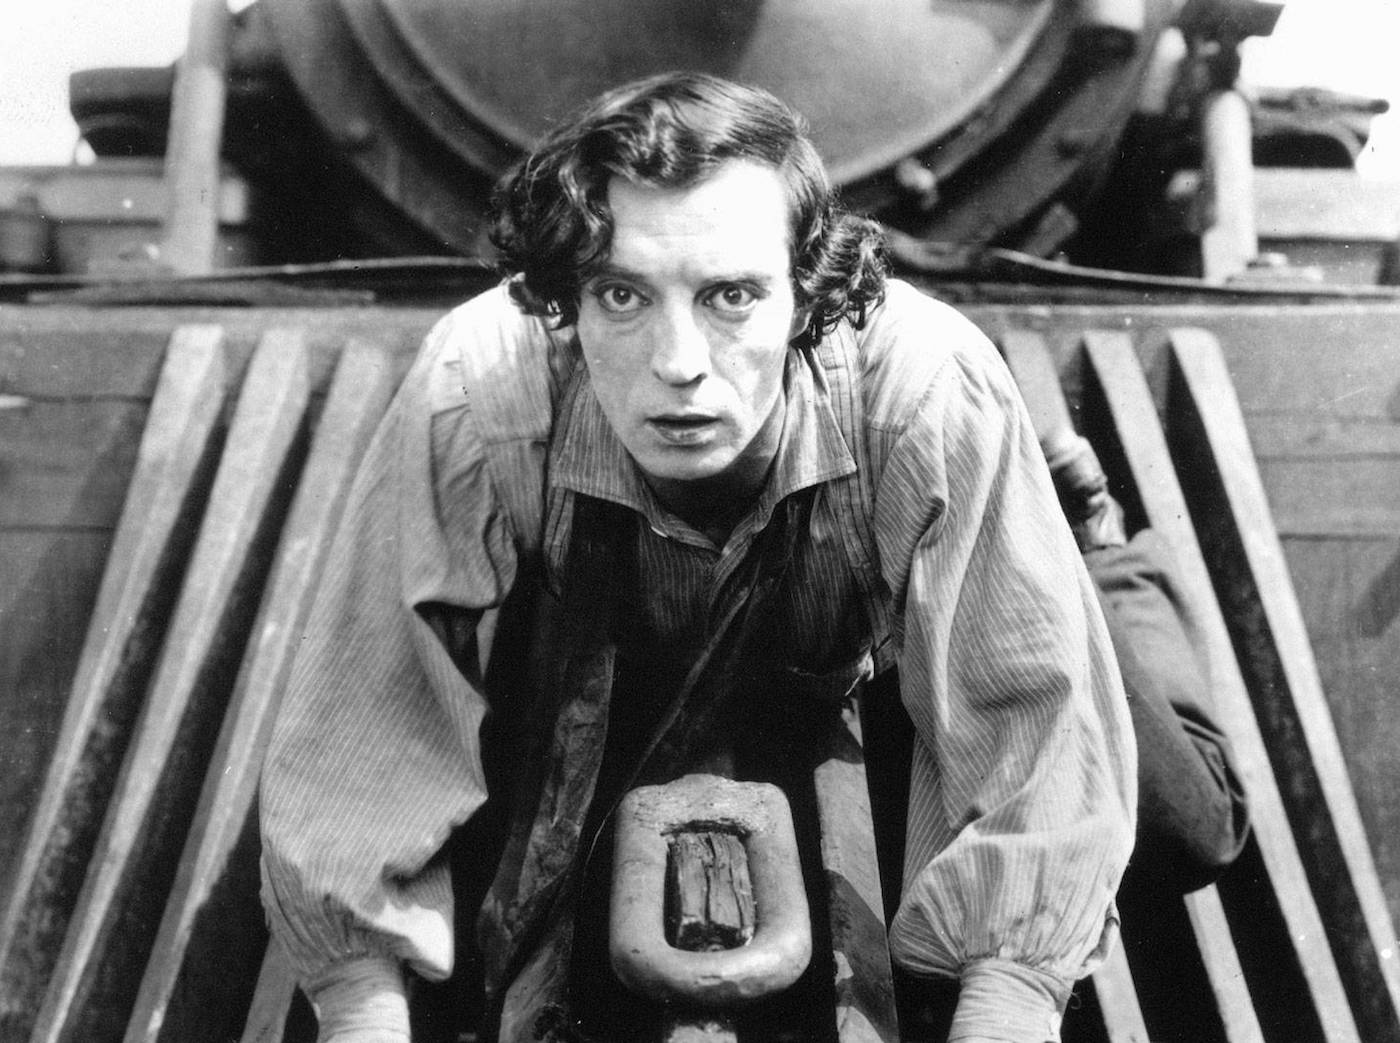 Mais que regarde fixement Buster Keaton?